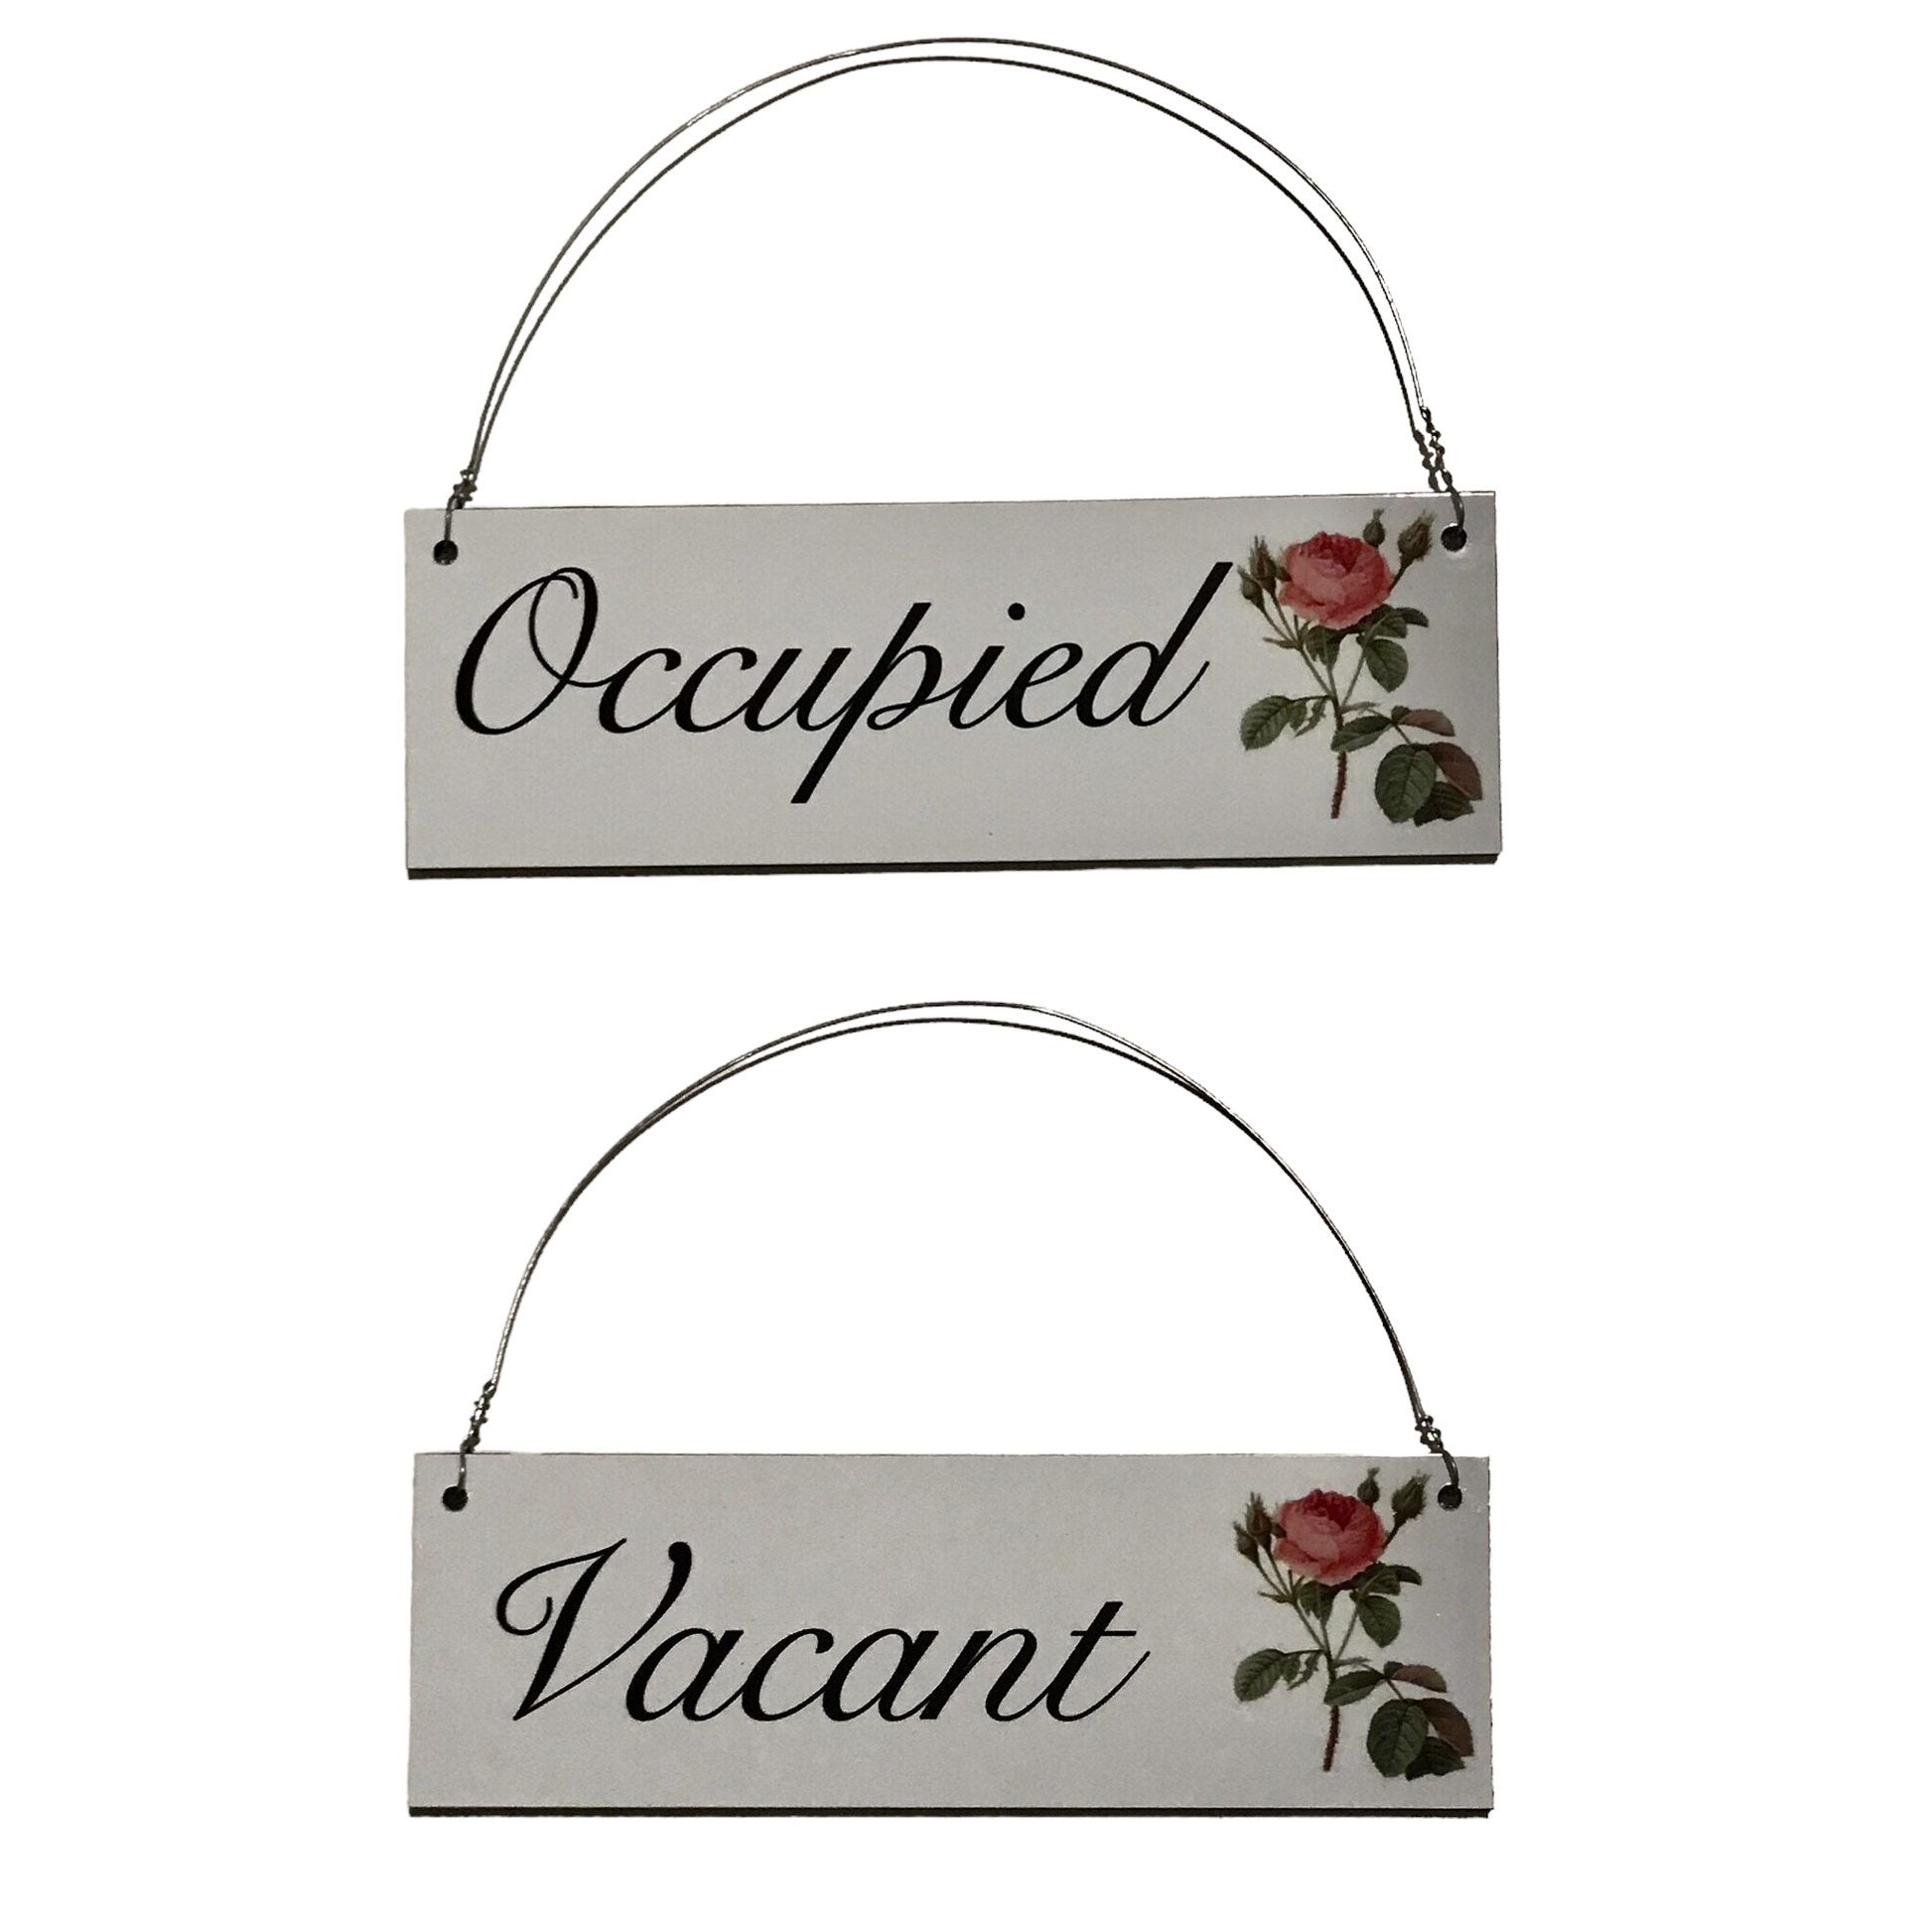 Vacant & Occupied Rose Toilet Bathroom Door Sign - The Renmy Store Homewares & Gifts 